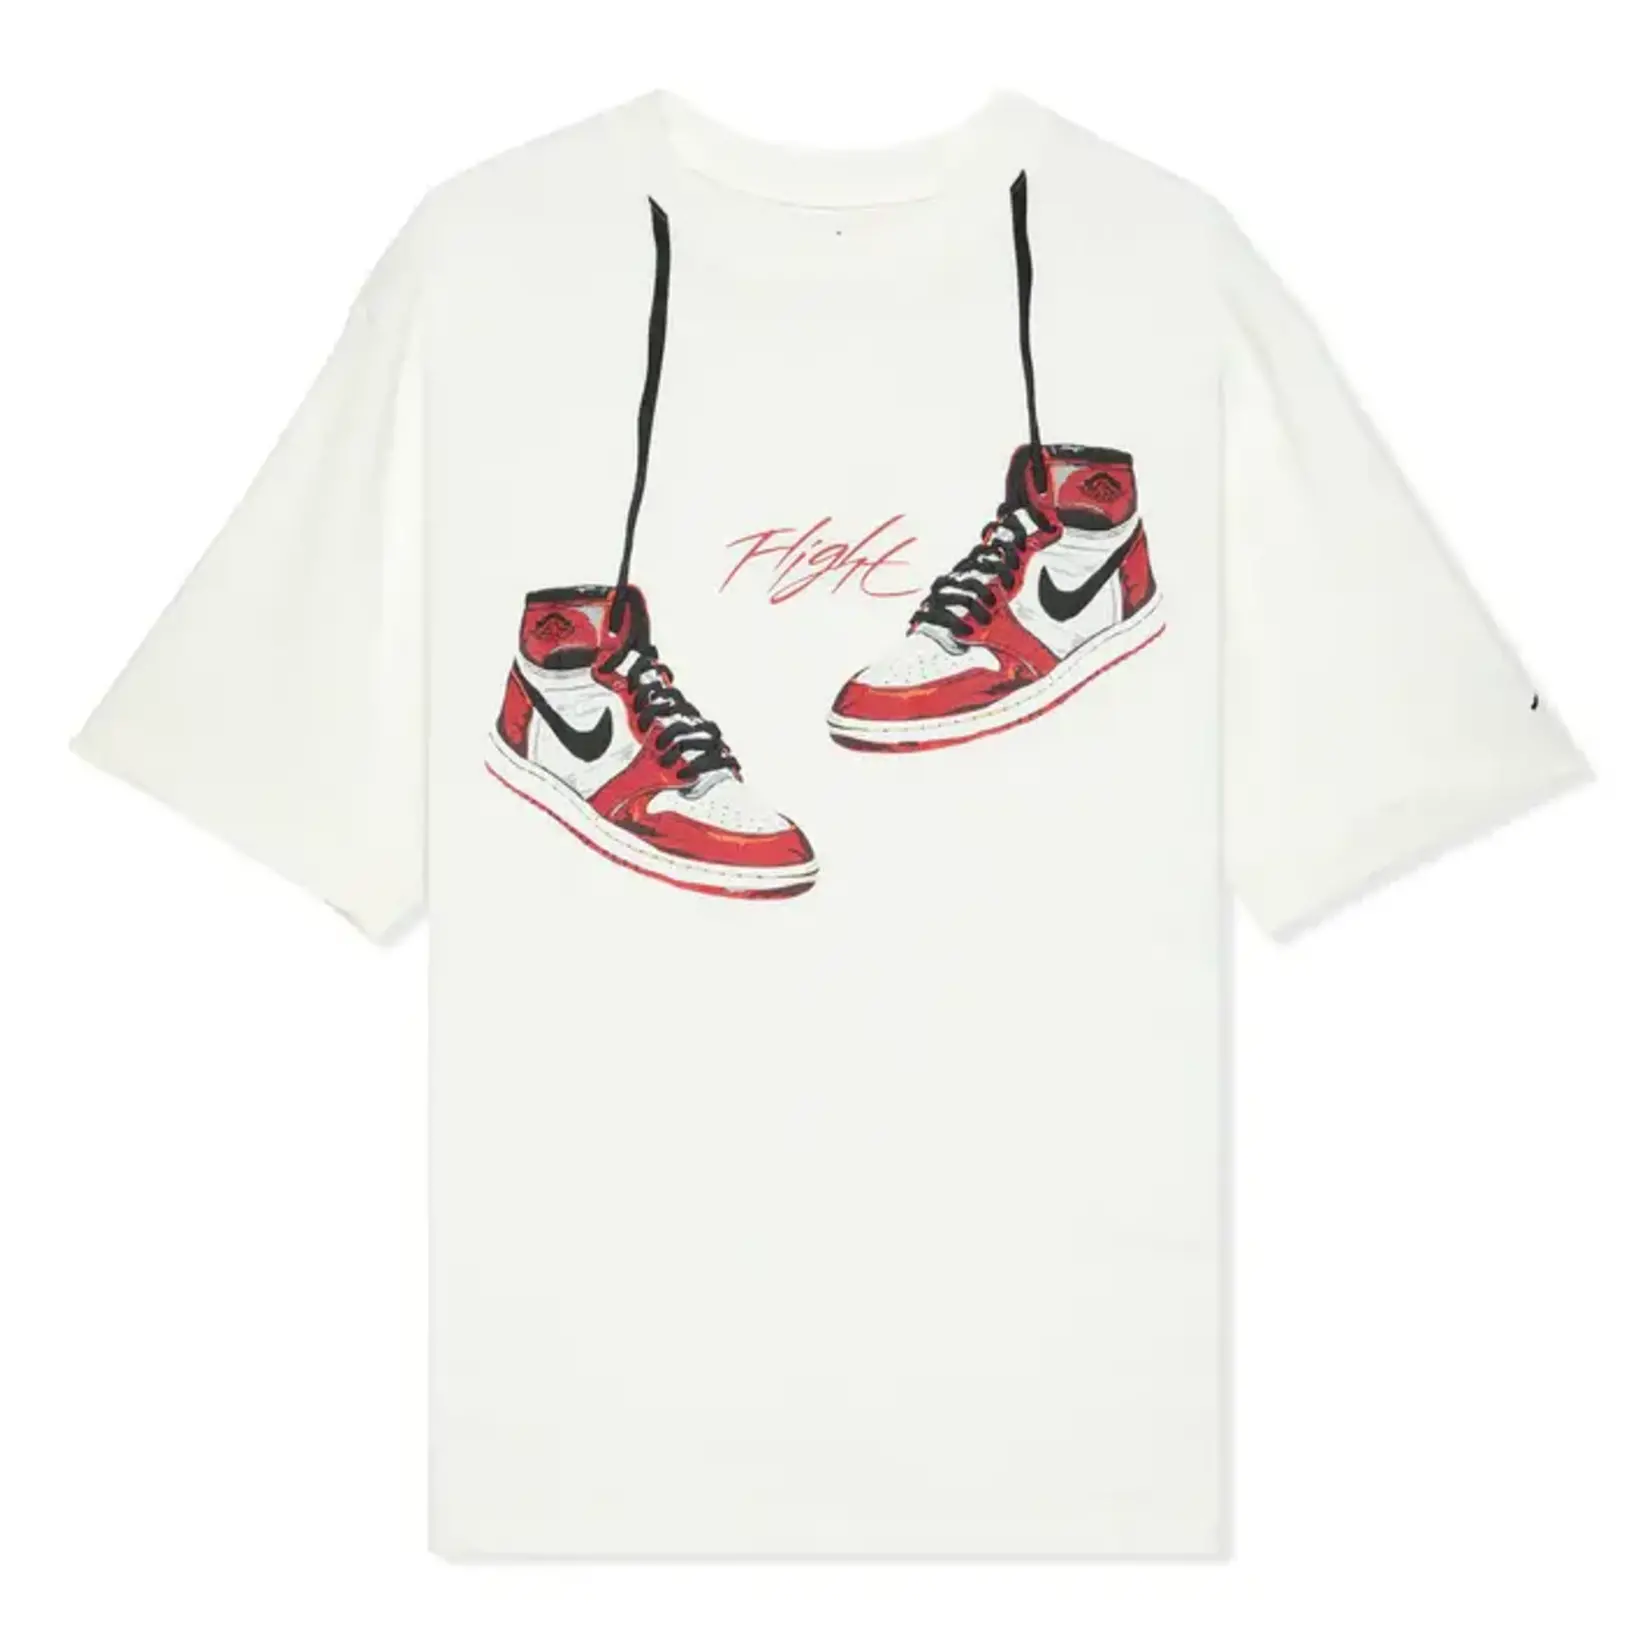 Nike Nike Air Jordan Men's Jordan 1985 Flight T-Shirt White Size Large, DS BRAND NEW